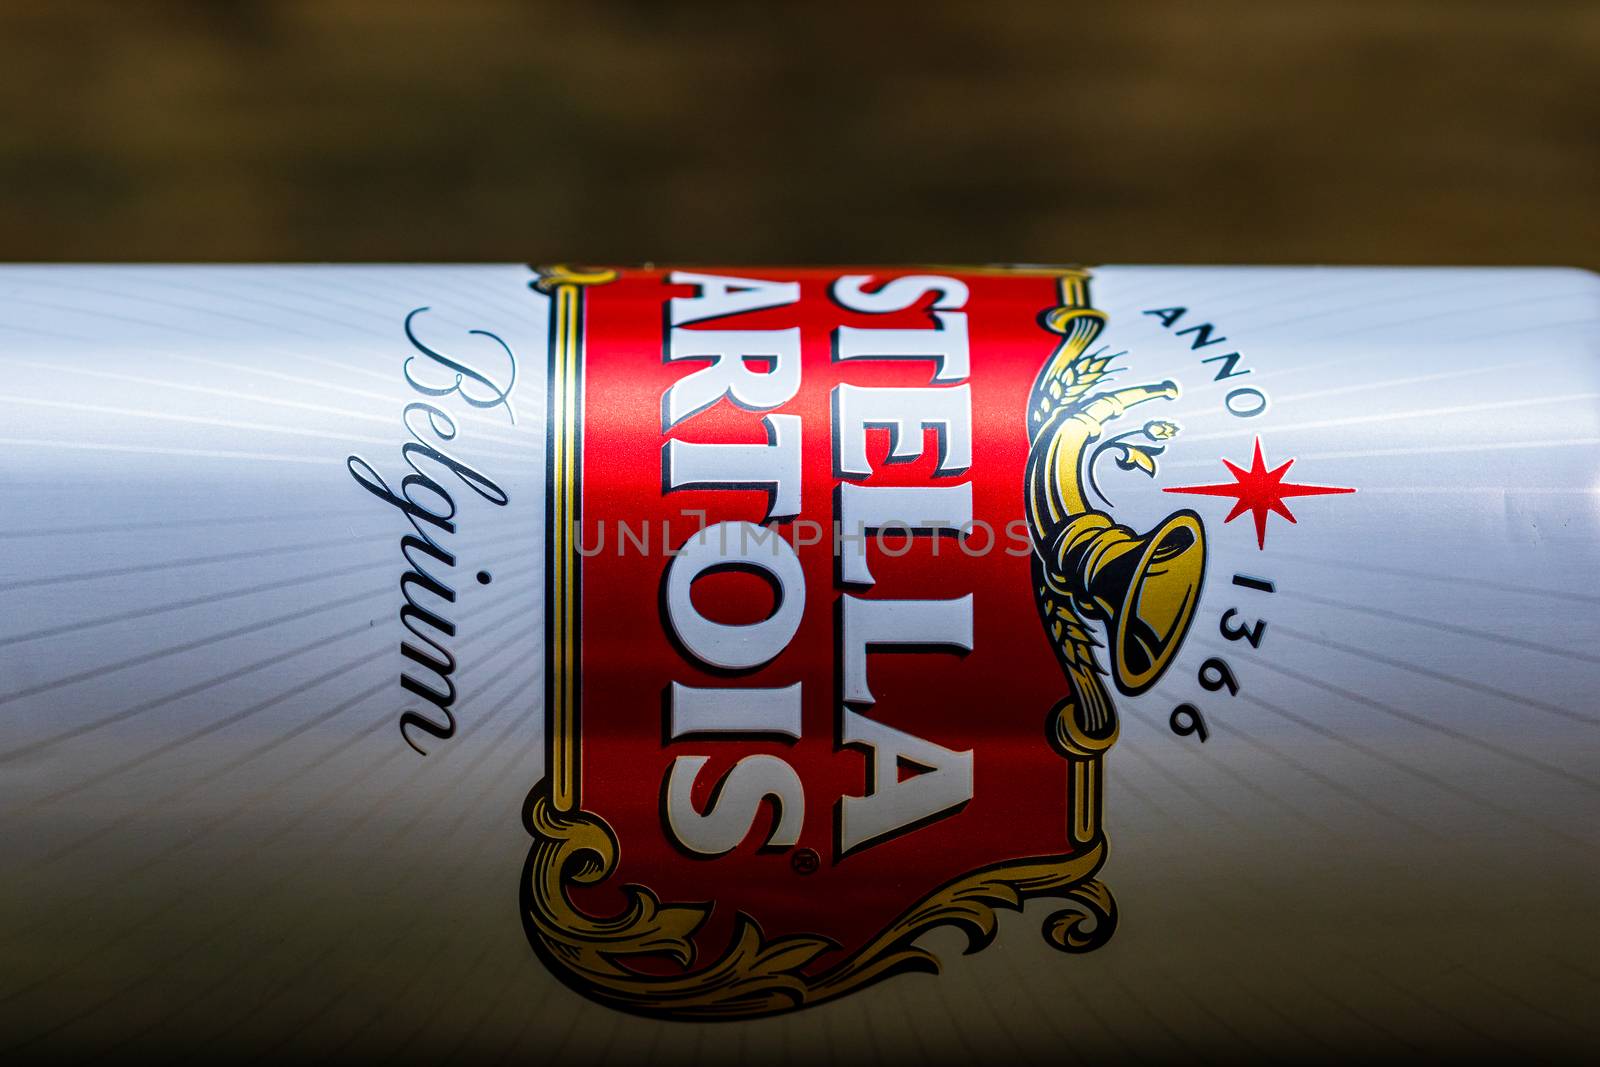 Great Belgium beer - Stella Artois. Belgium Premium Lager beer c by vladispas